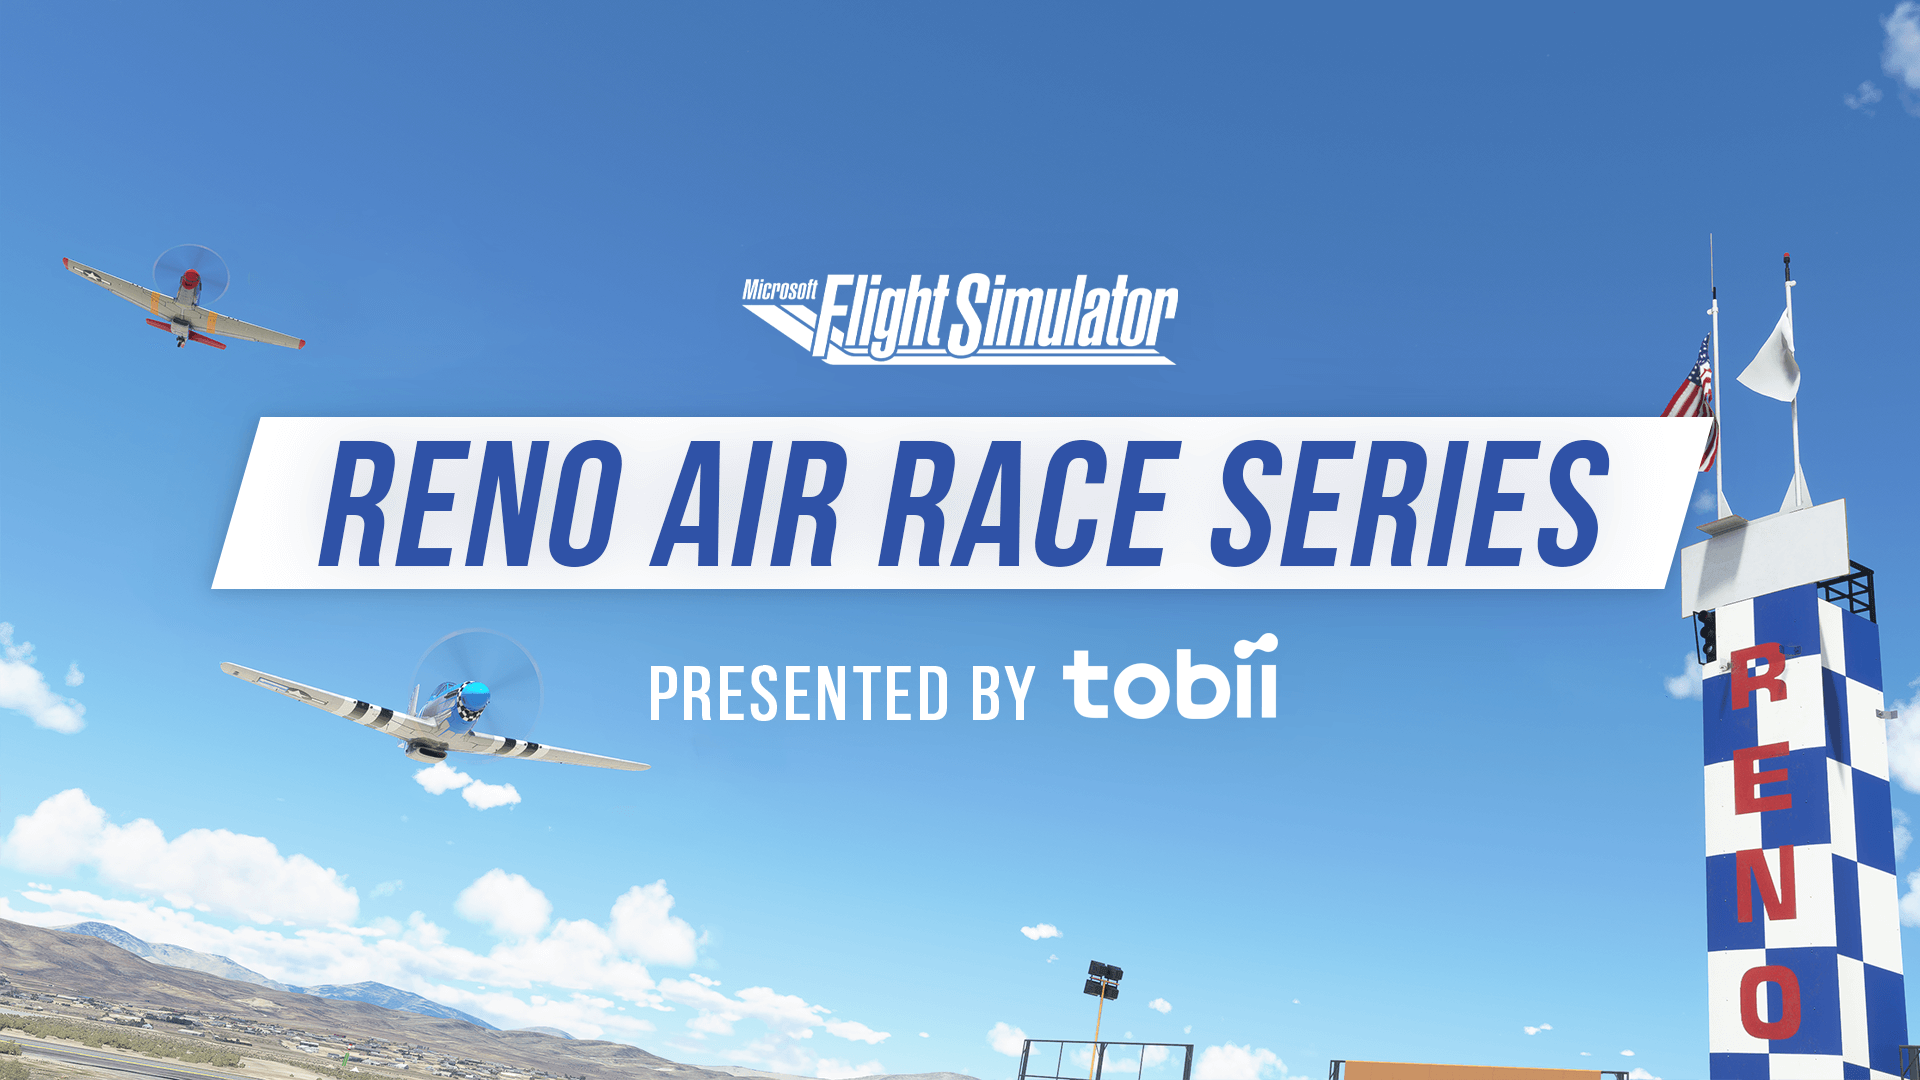 Microsoft Flight Simulator Reno Air Race Series Presented by Tobii